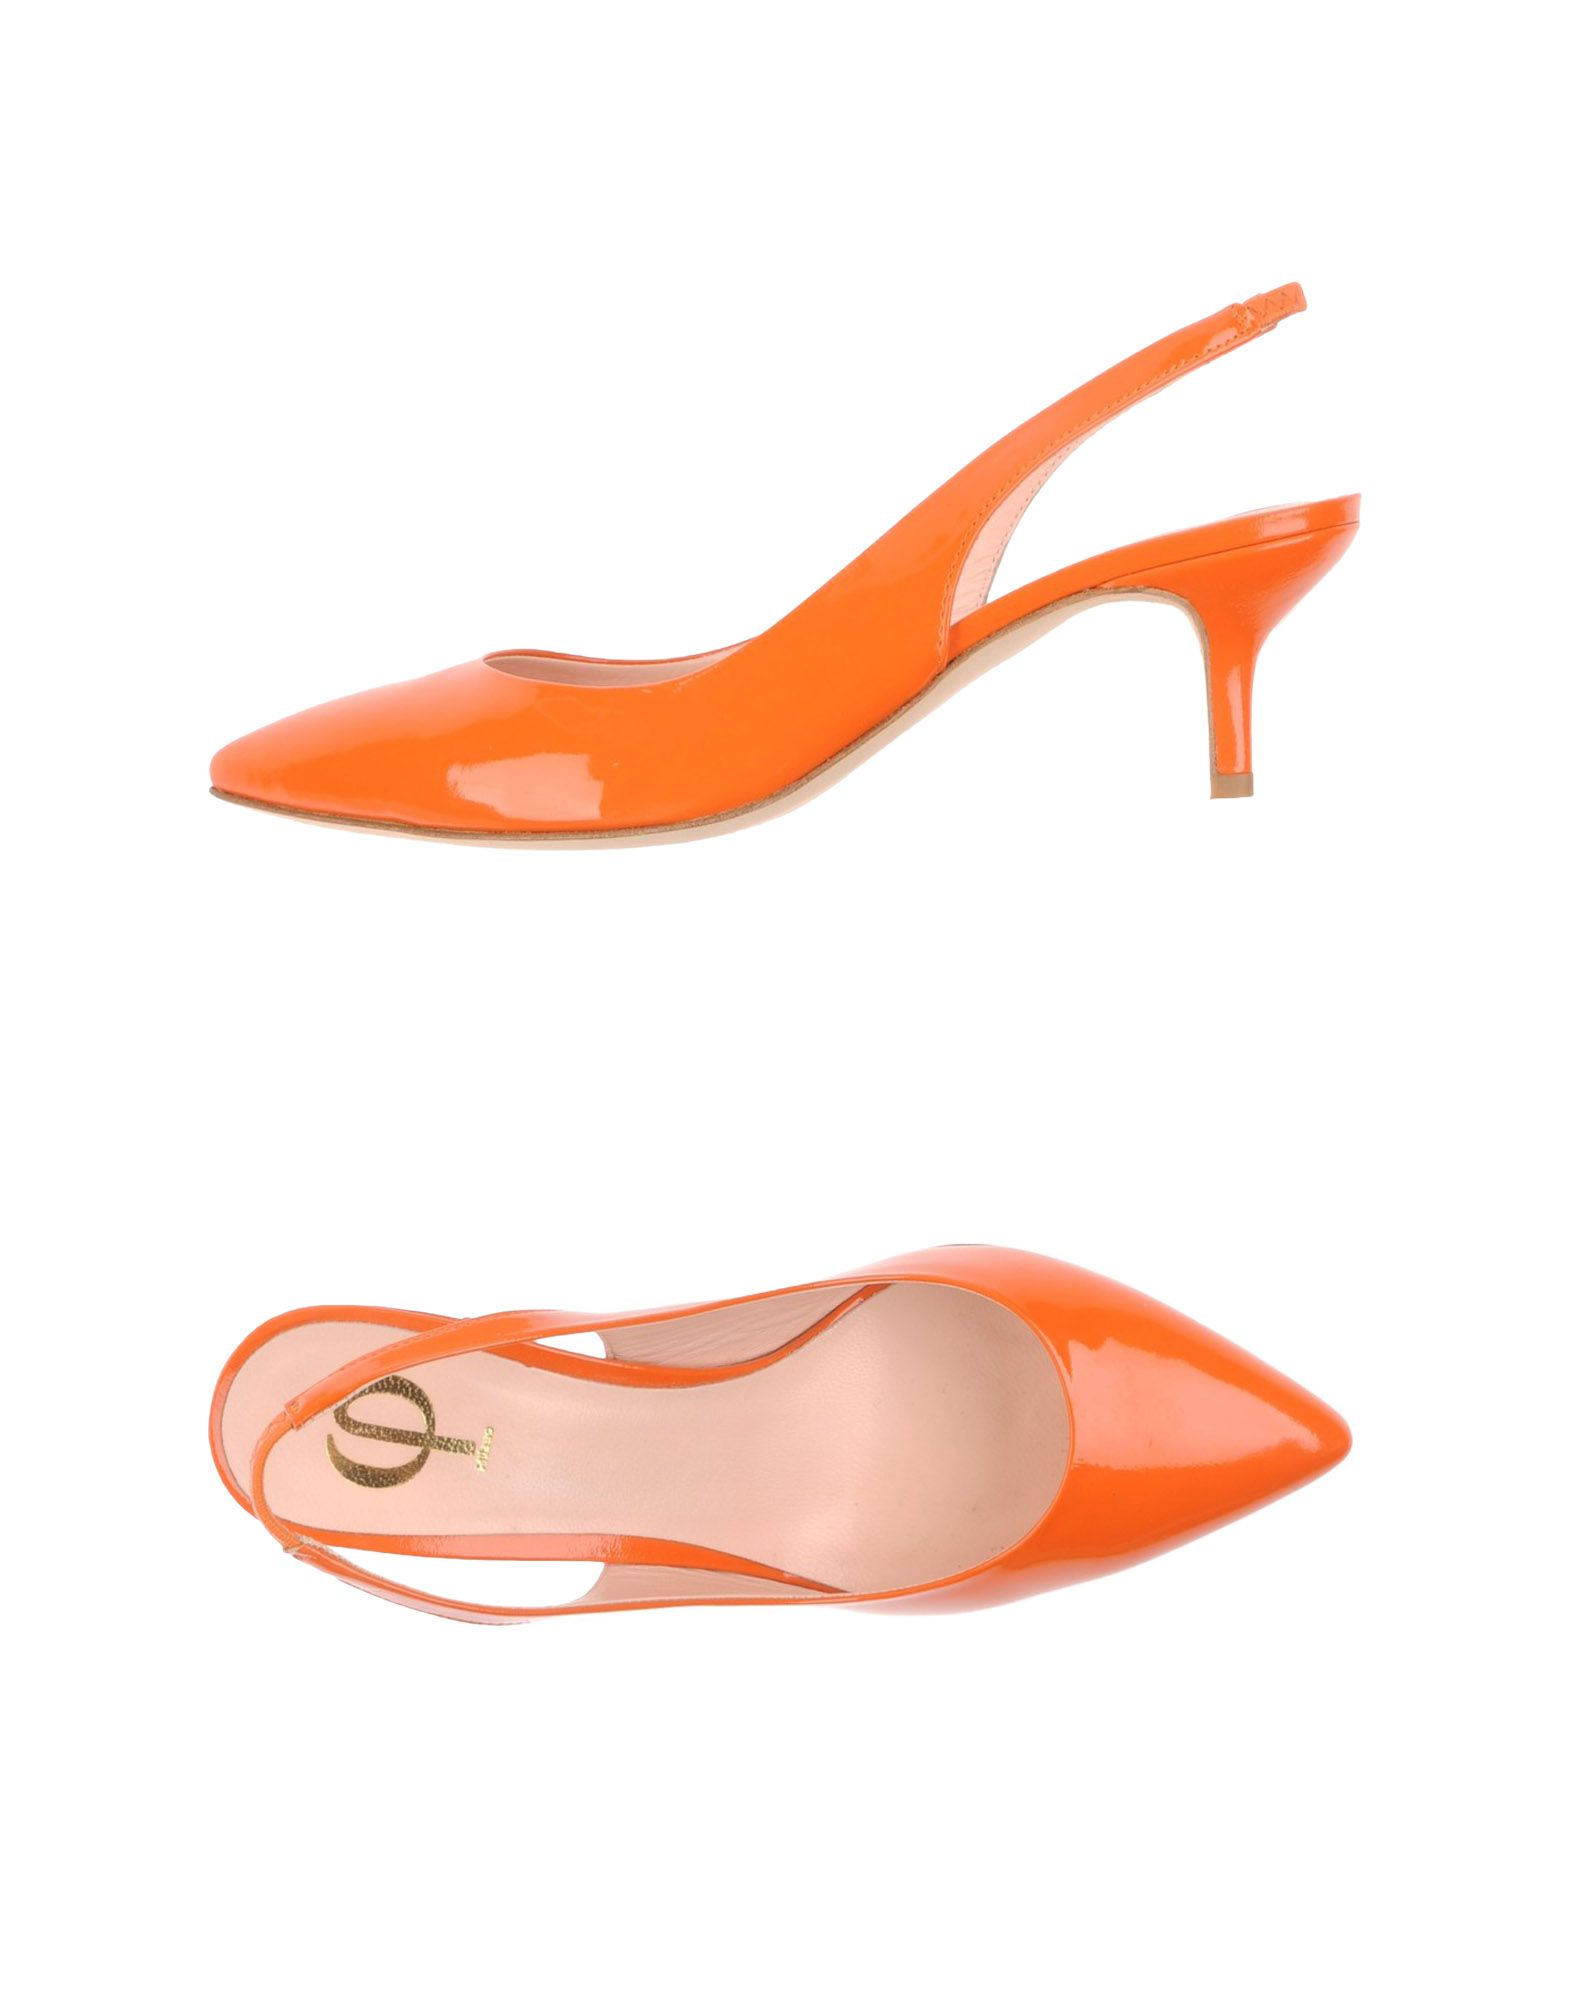 Foto Festamilano Zapatos Abiertos Mujer Naranja